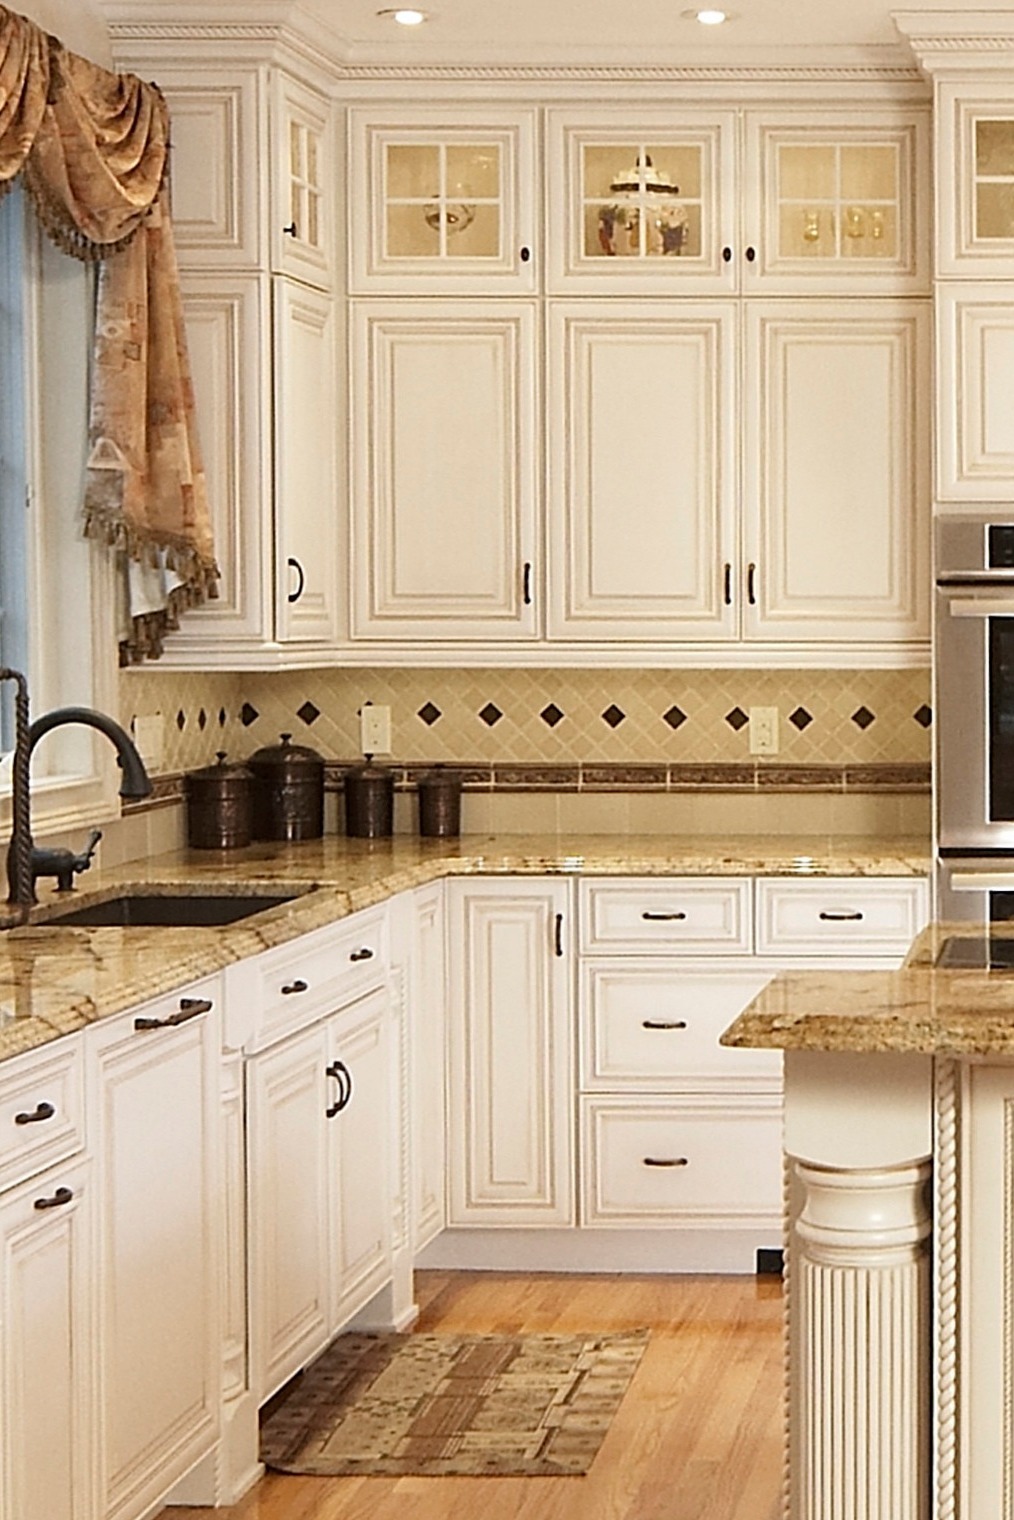 50+ Popular Brown Granite Kitchen Countertops Design Ideas